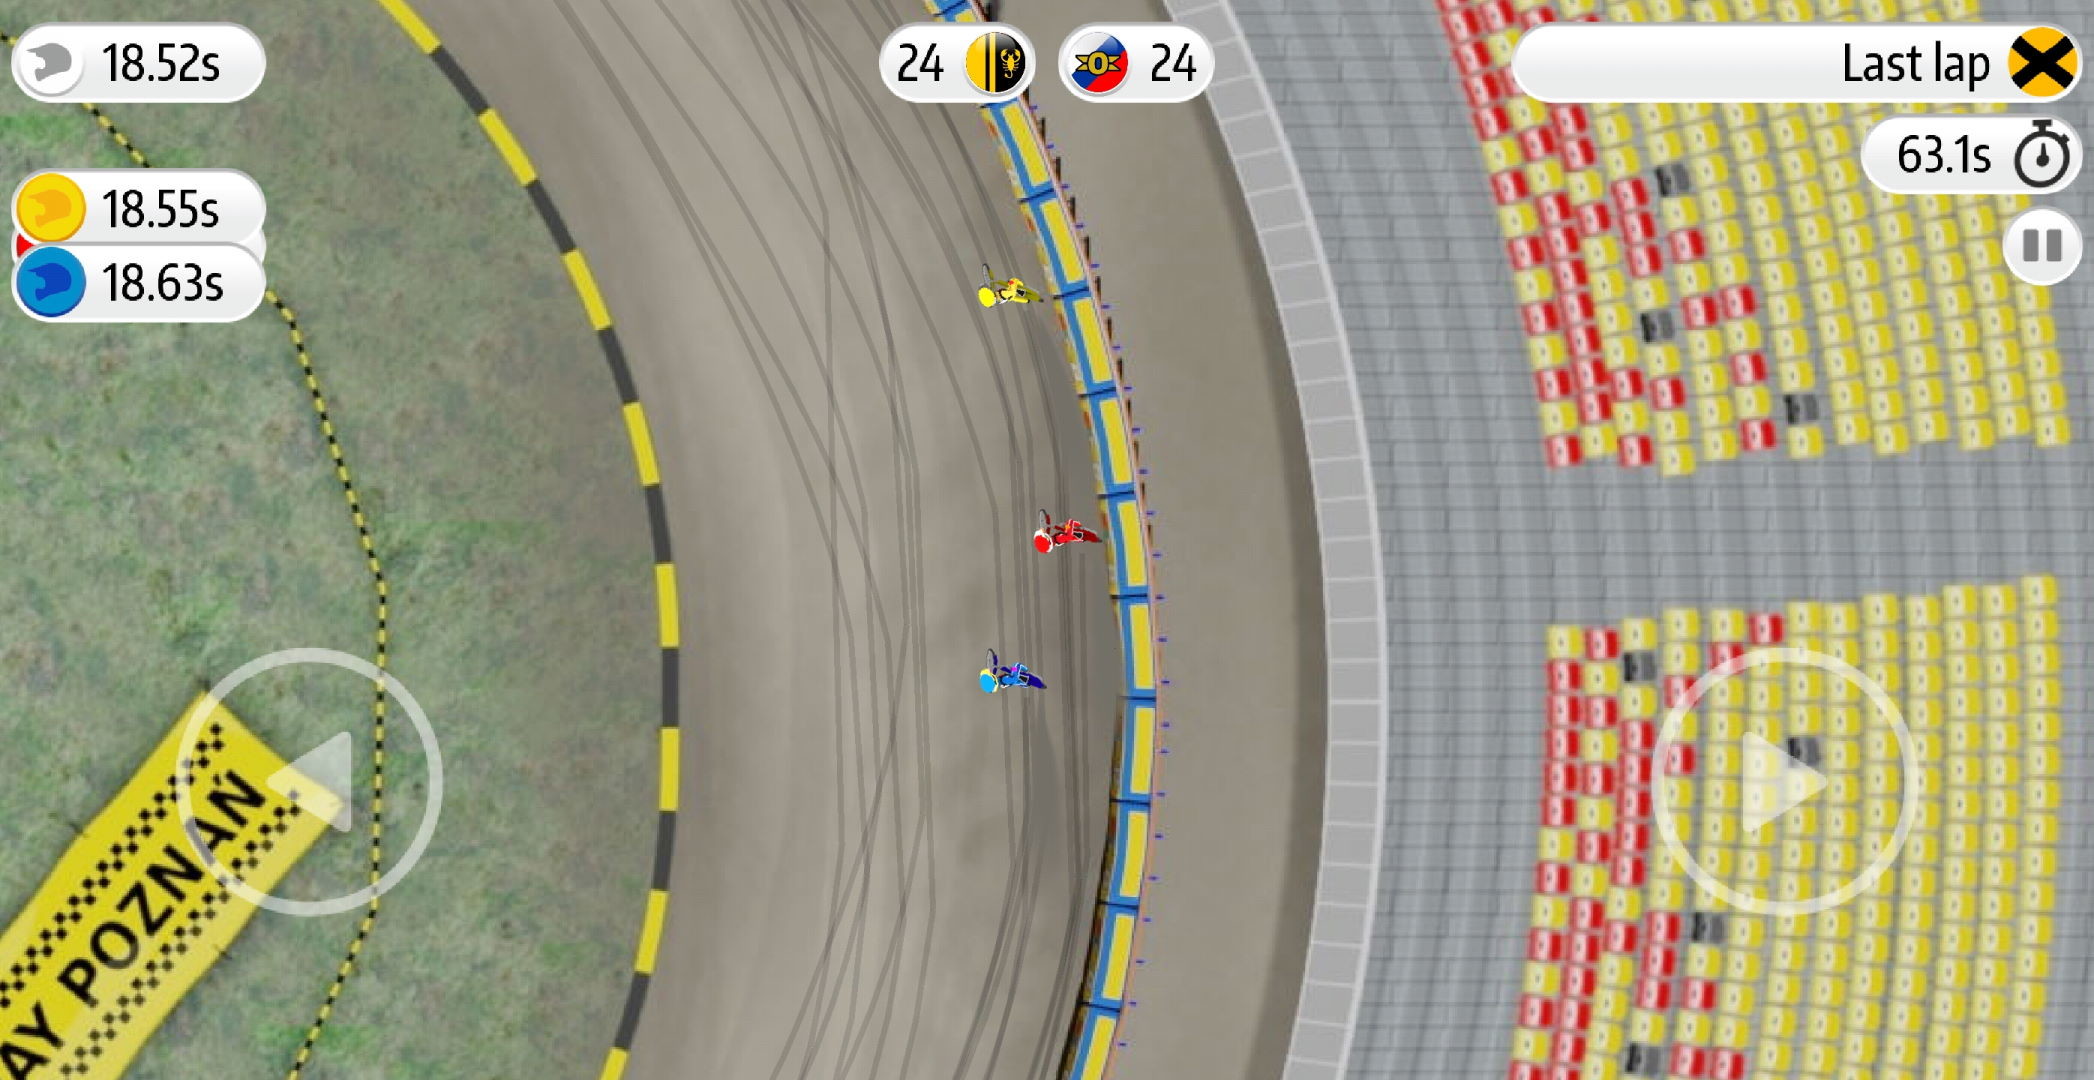 Speedway Challenge 20 screenshot